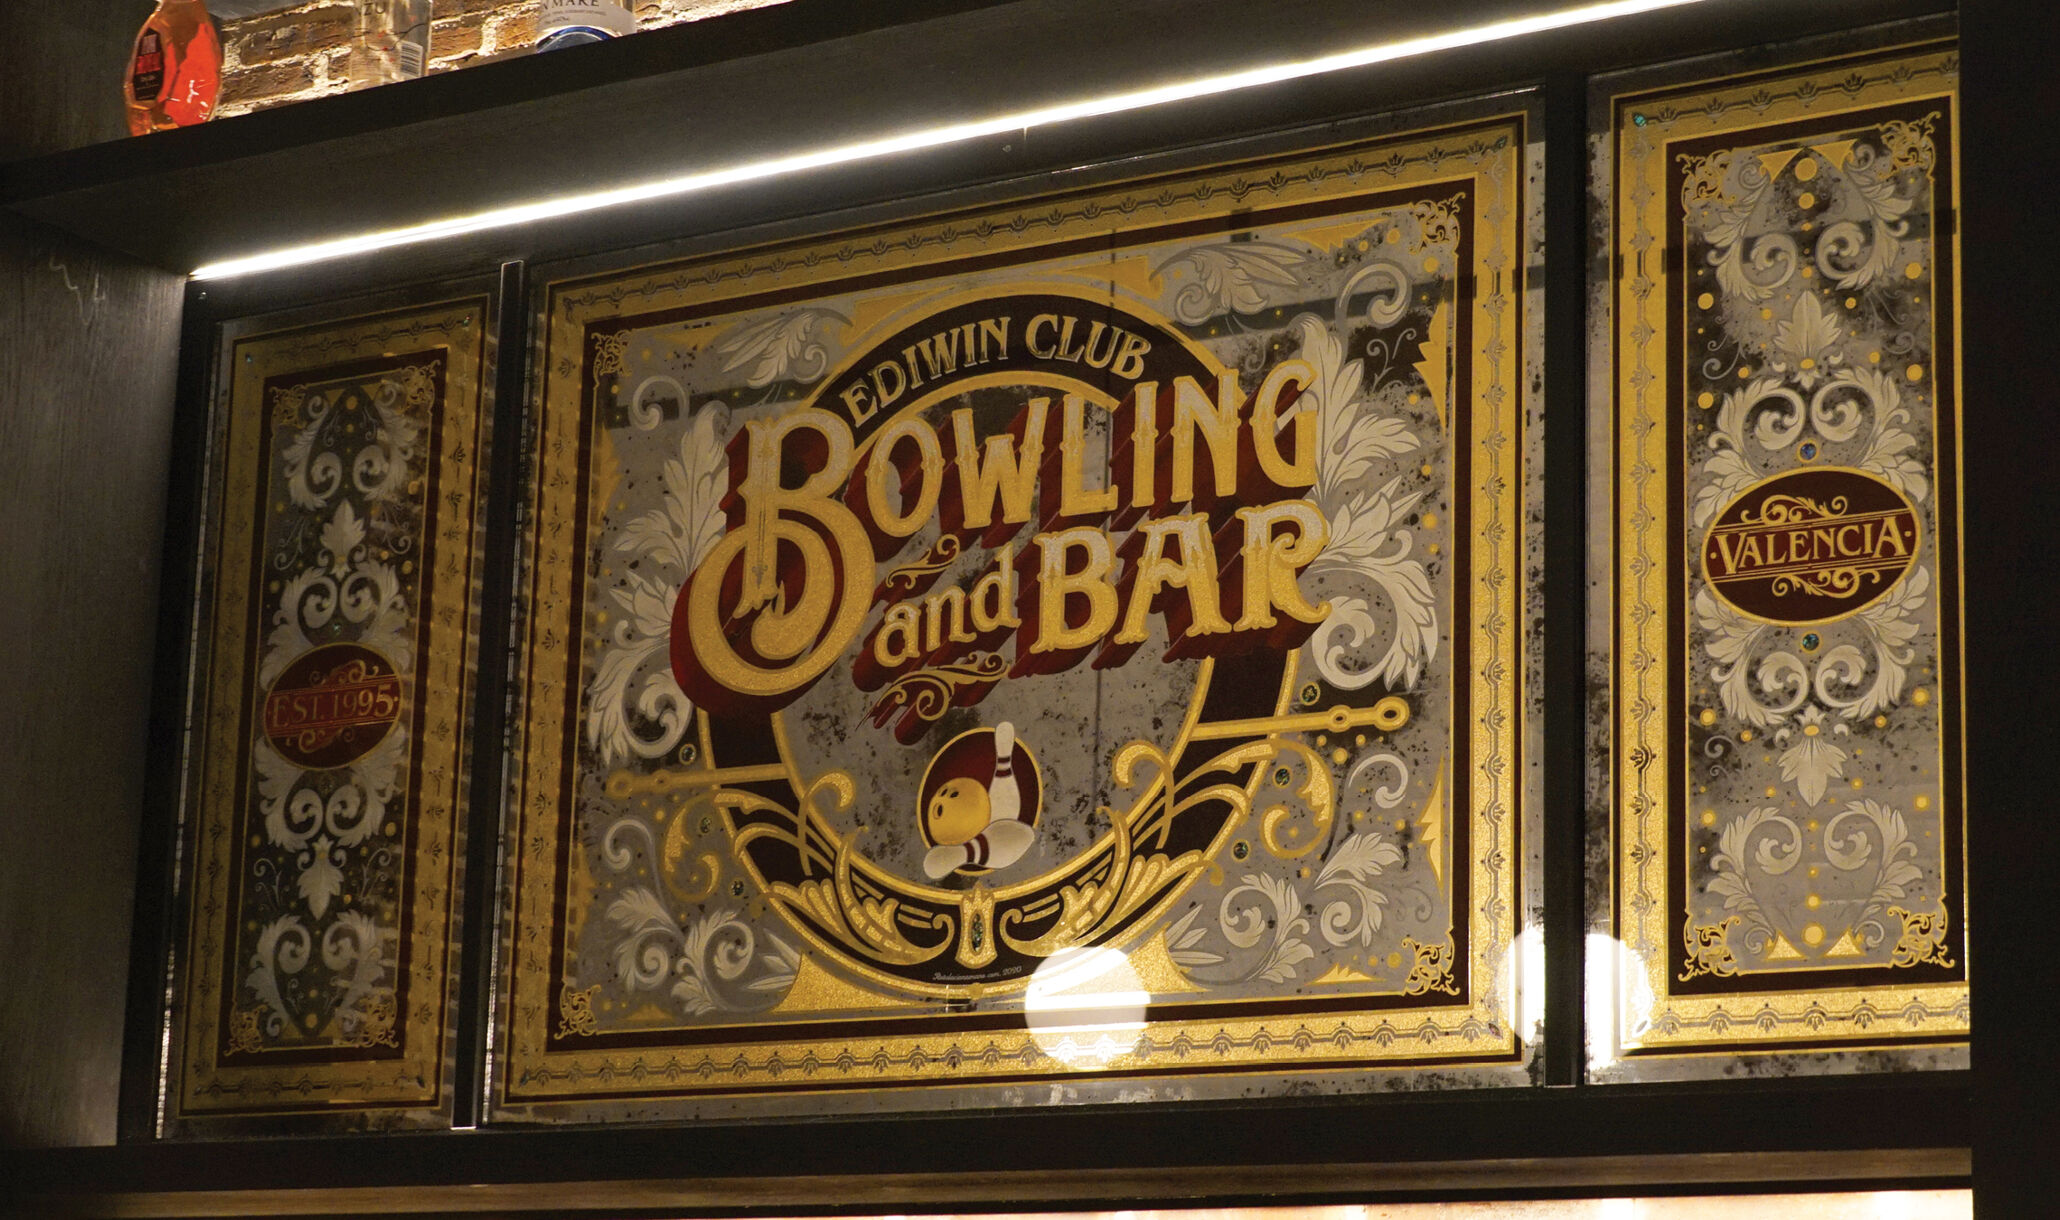 Ediwin Bowling Club - Paterna, Spain - Bar signage-1